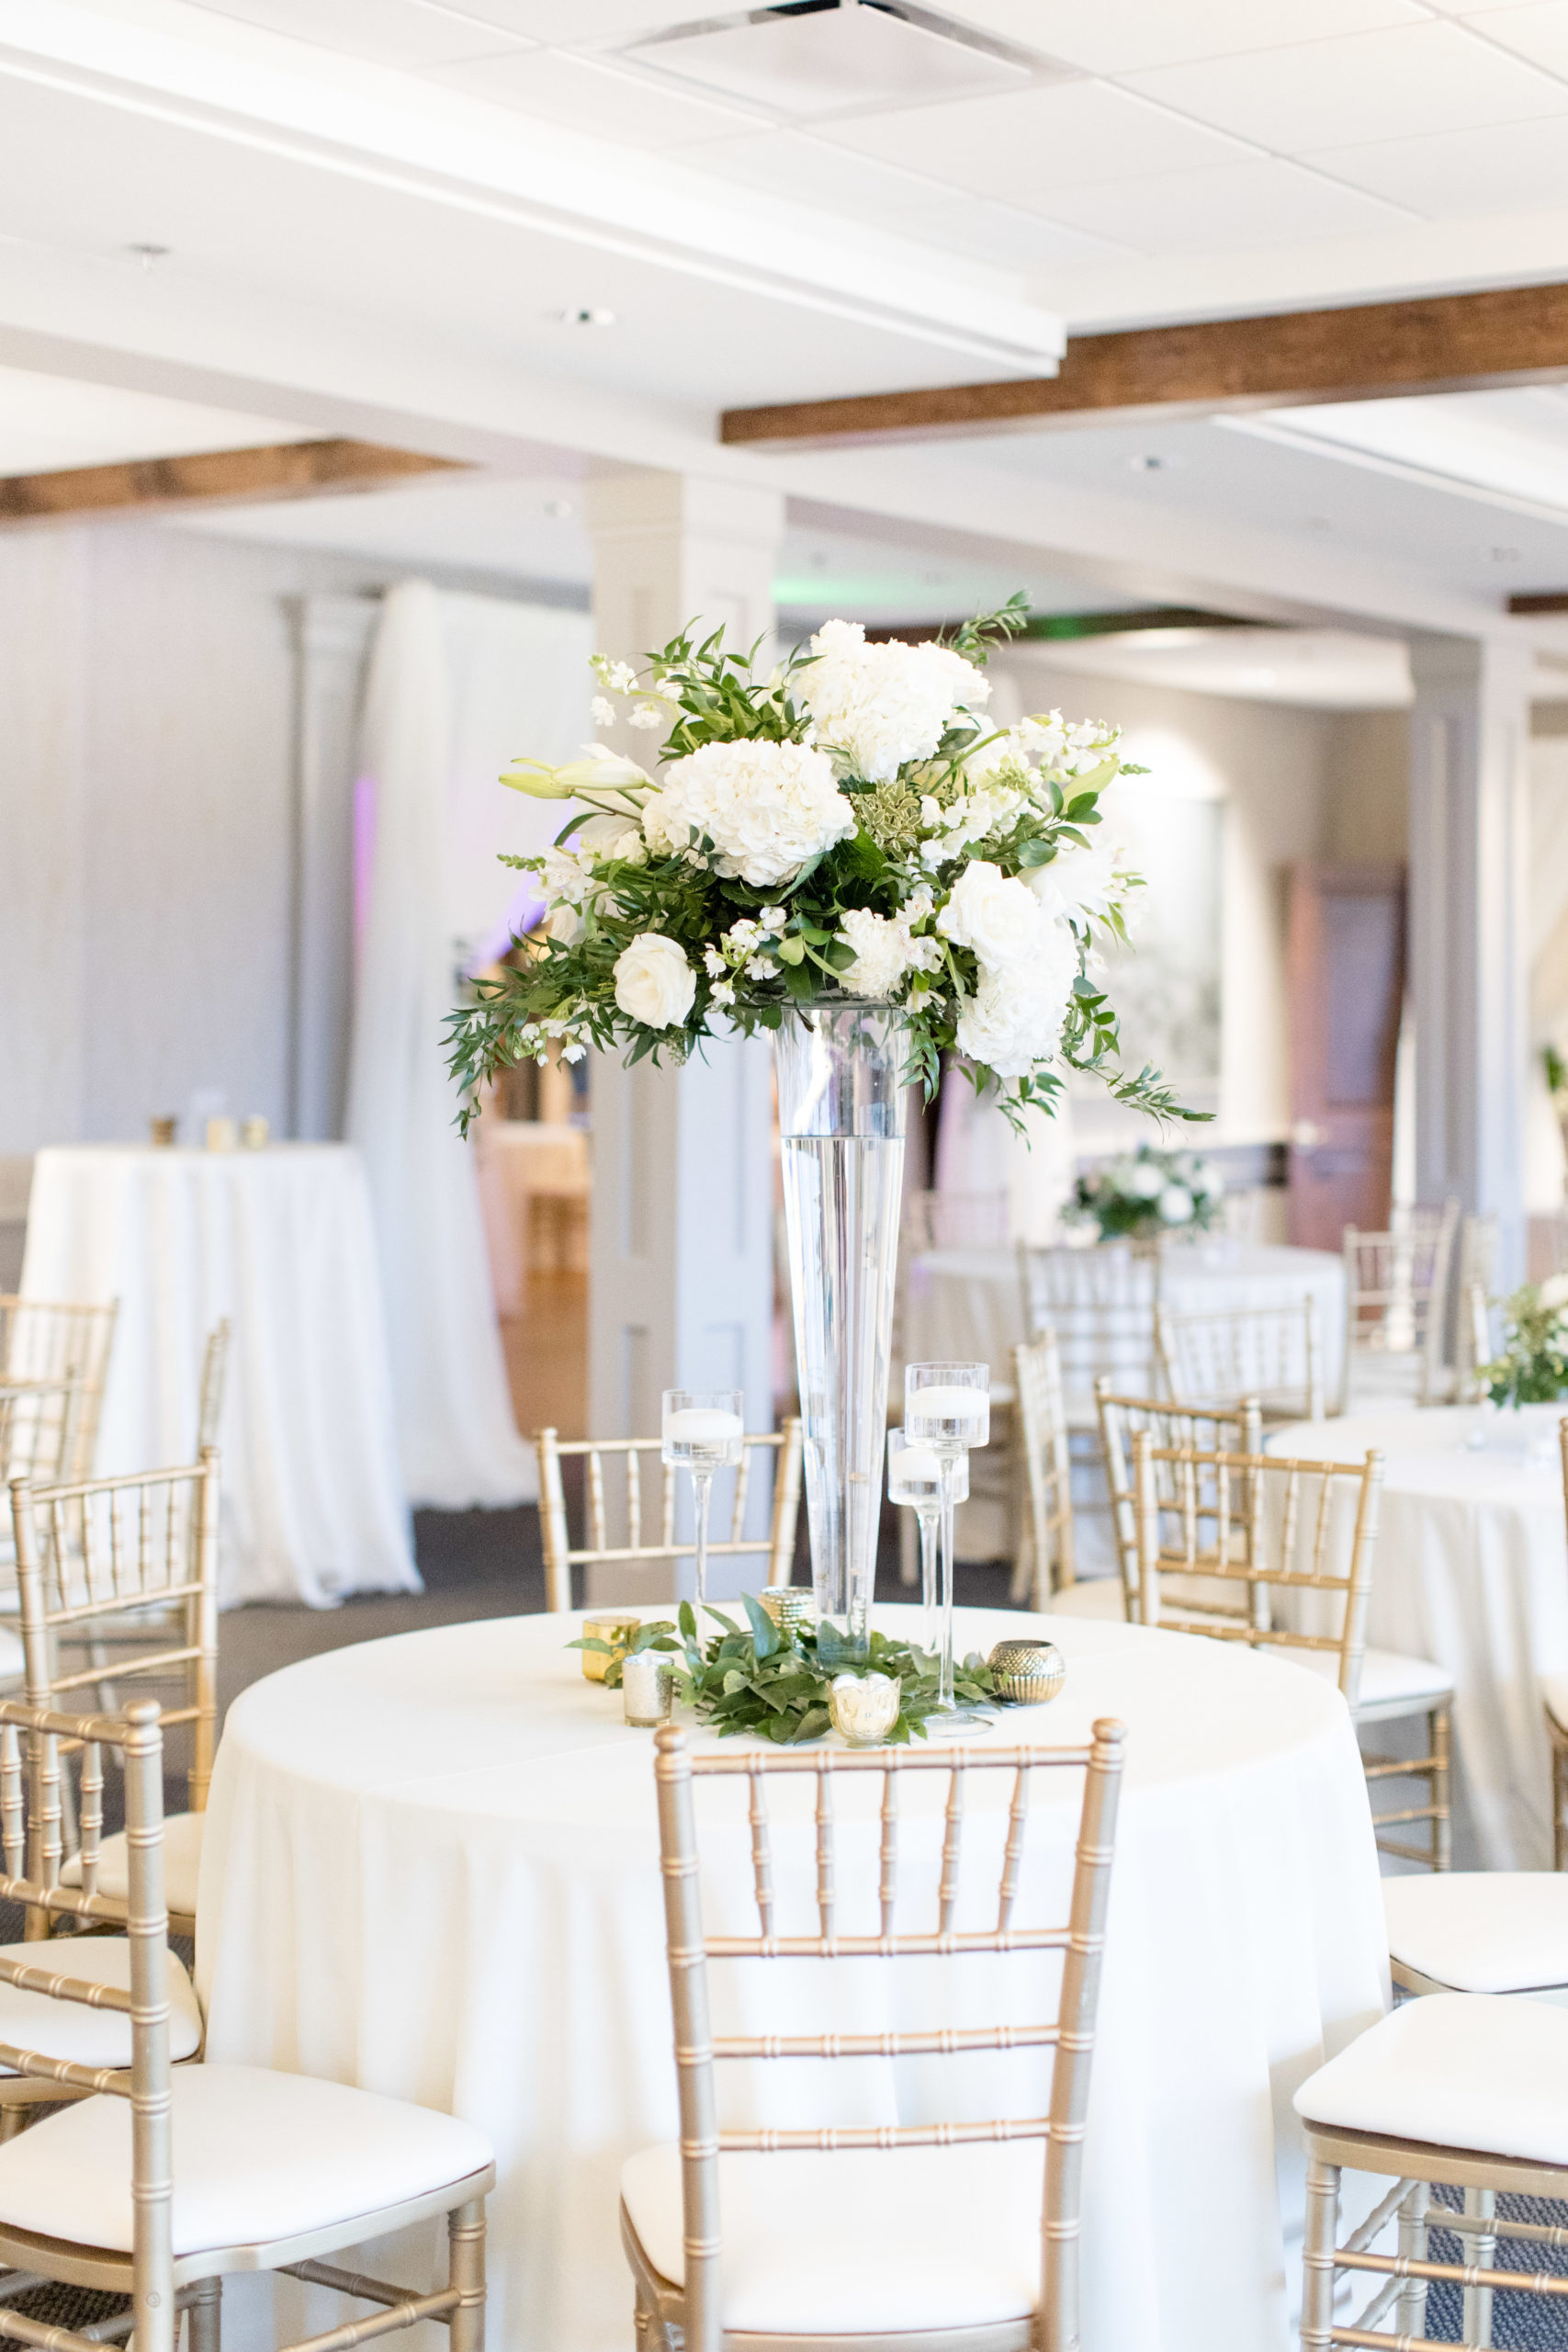 Floral centerpieces sit on reception tables.